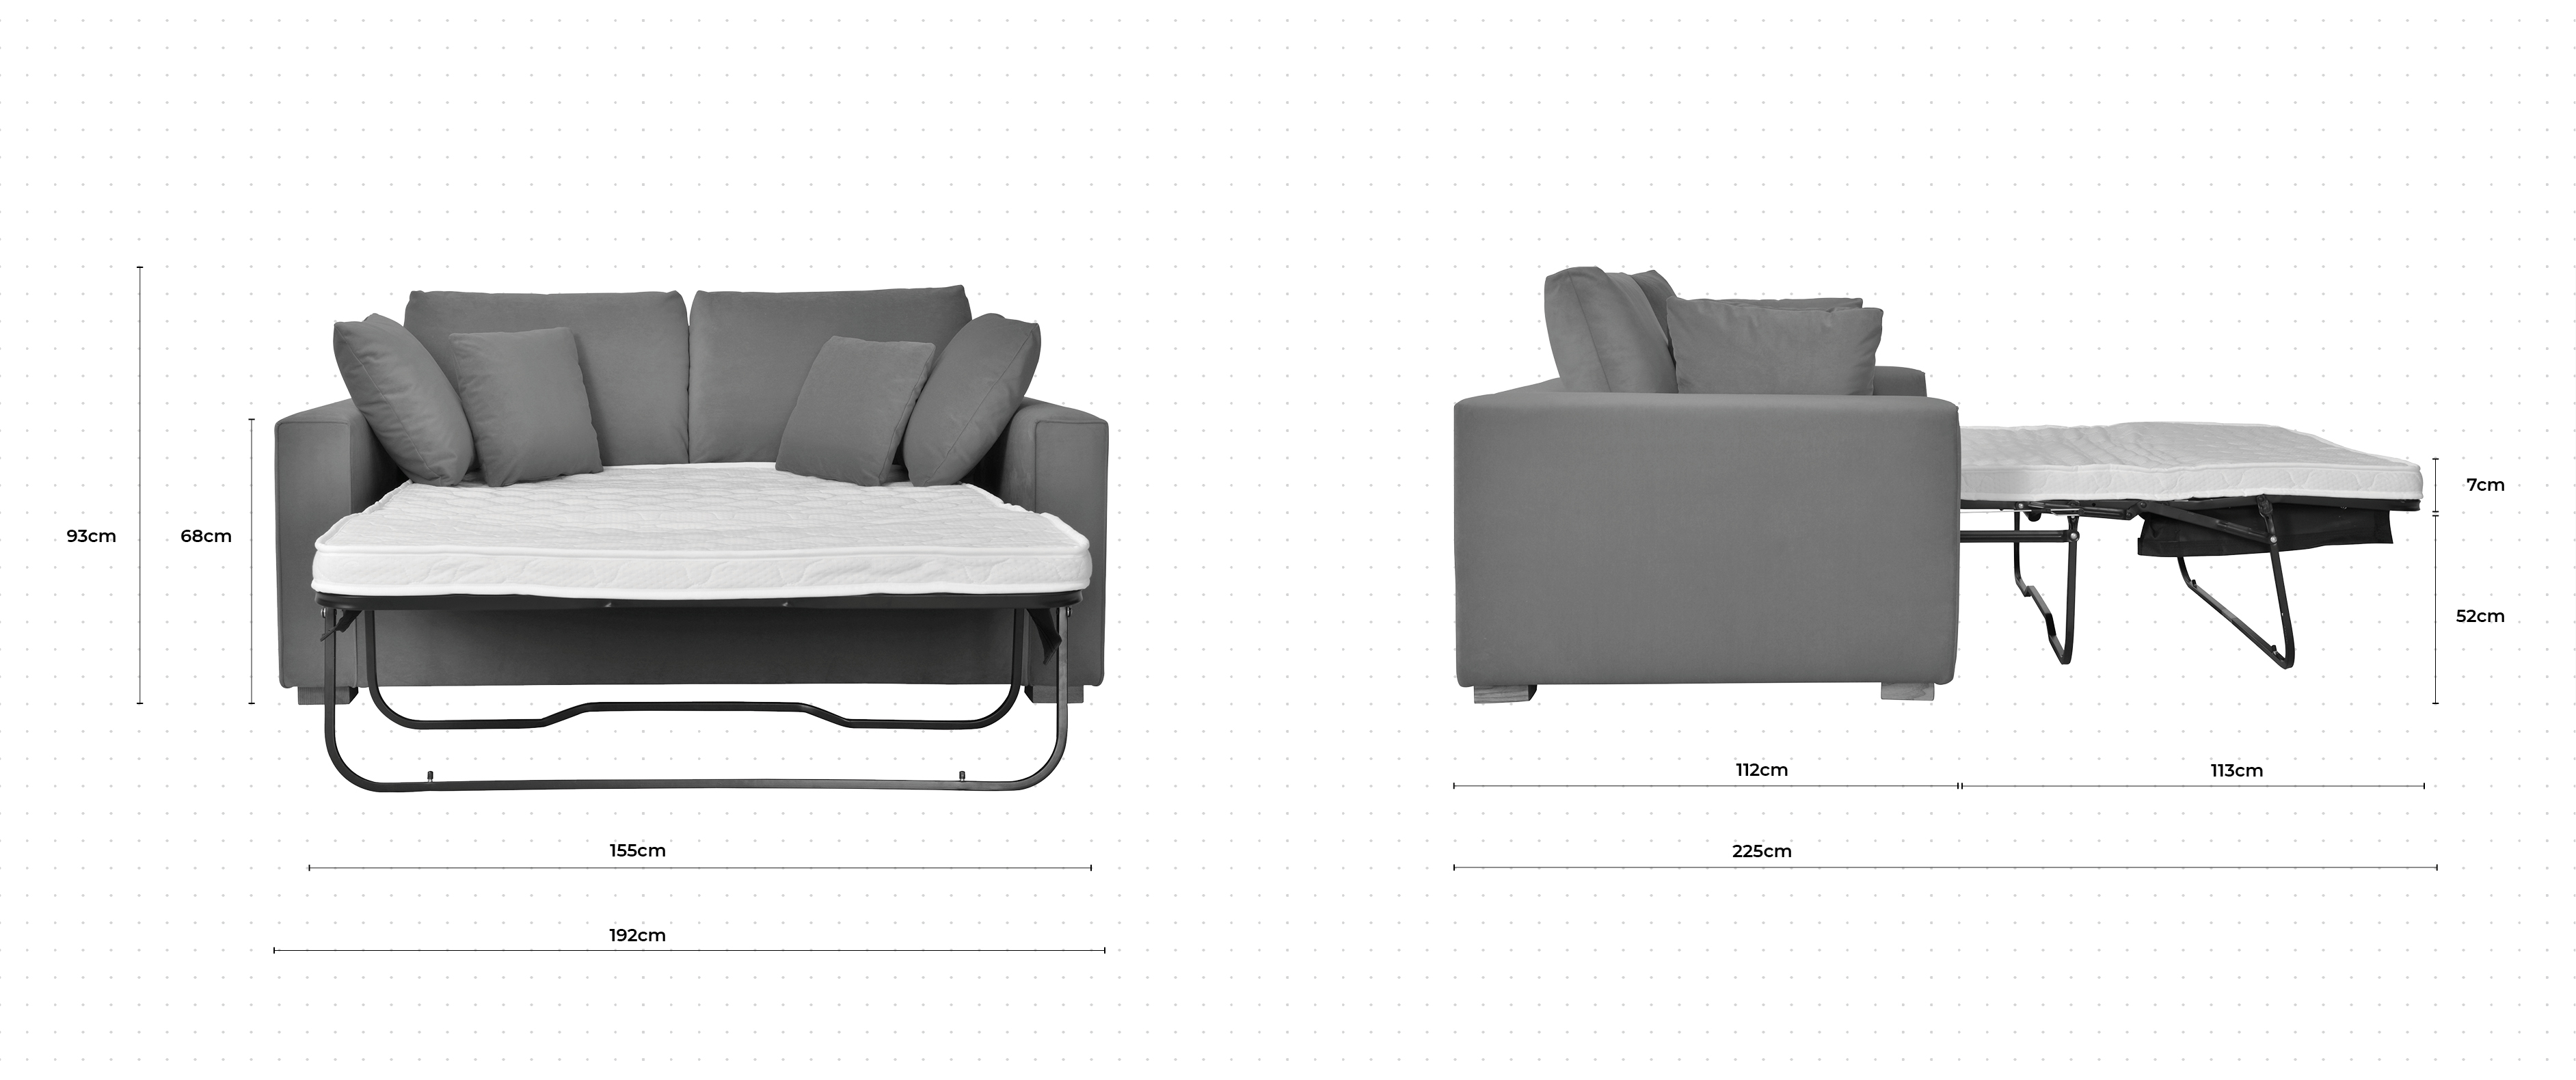 Dillon 2.5 Seater Sofa Bed dimensions